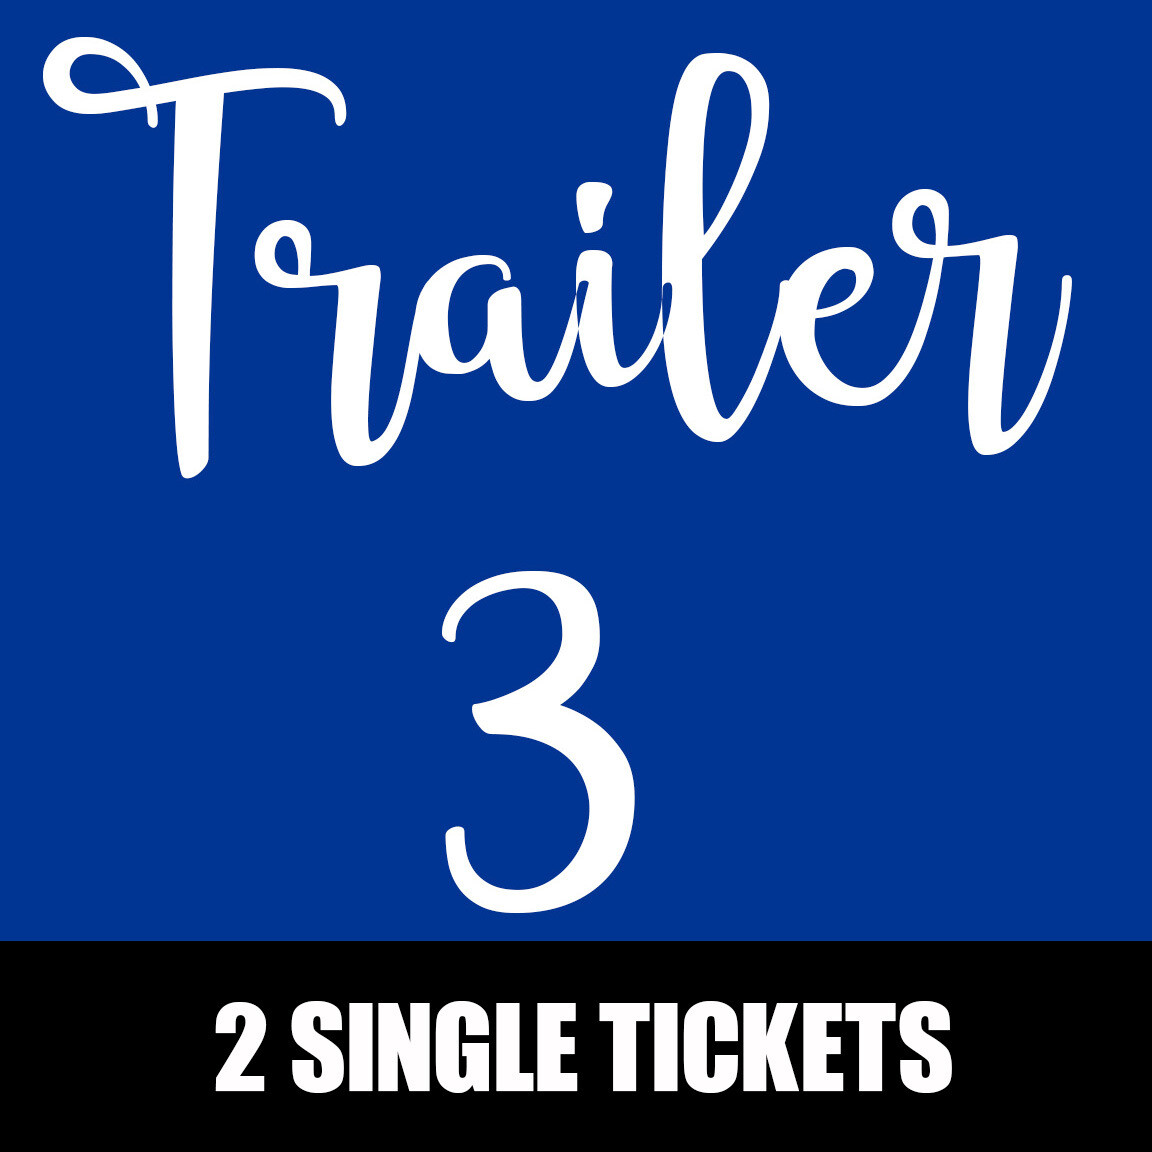 Trailer 3 - December 1st @ 7pm - 2 Single Tickets